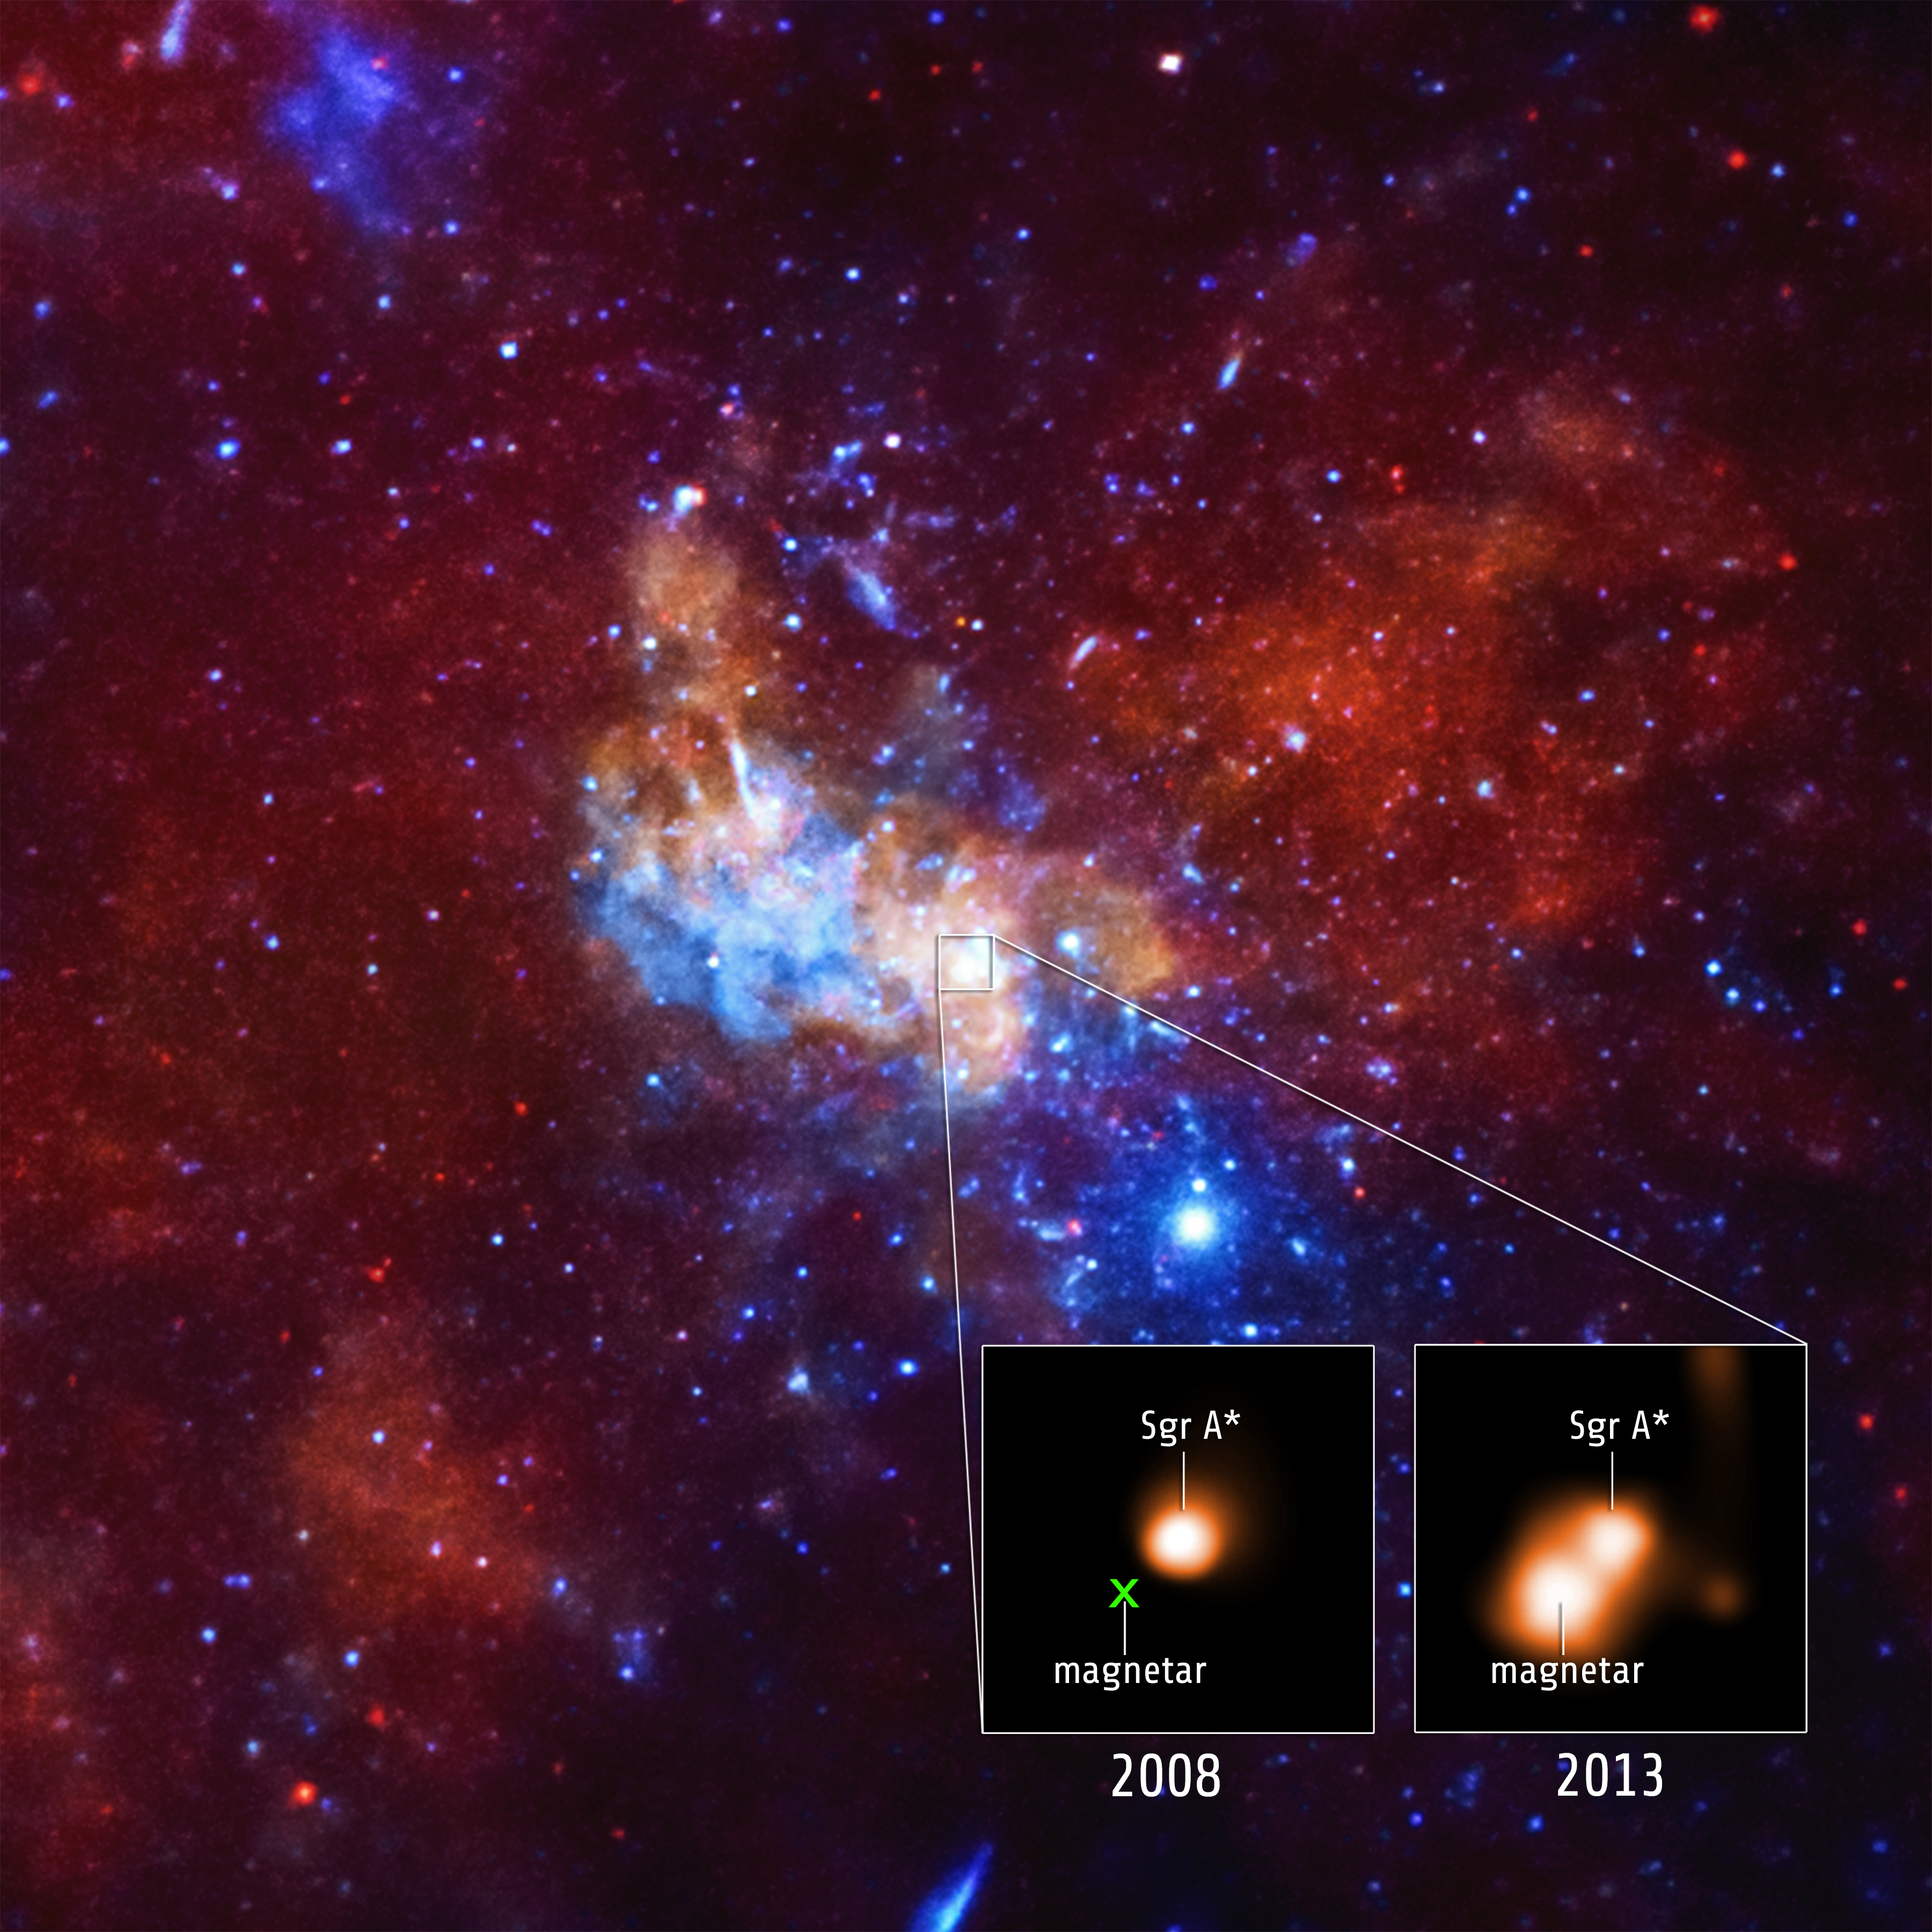 Parkes Radio Telescope Spots Bizarre Magnetar in the Milky Way